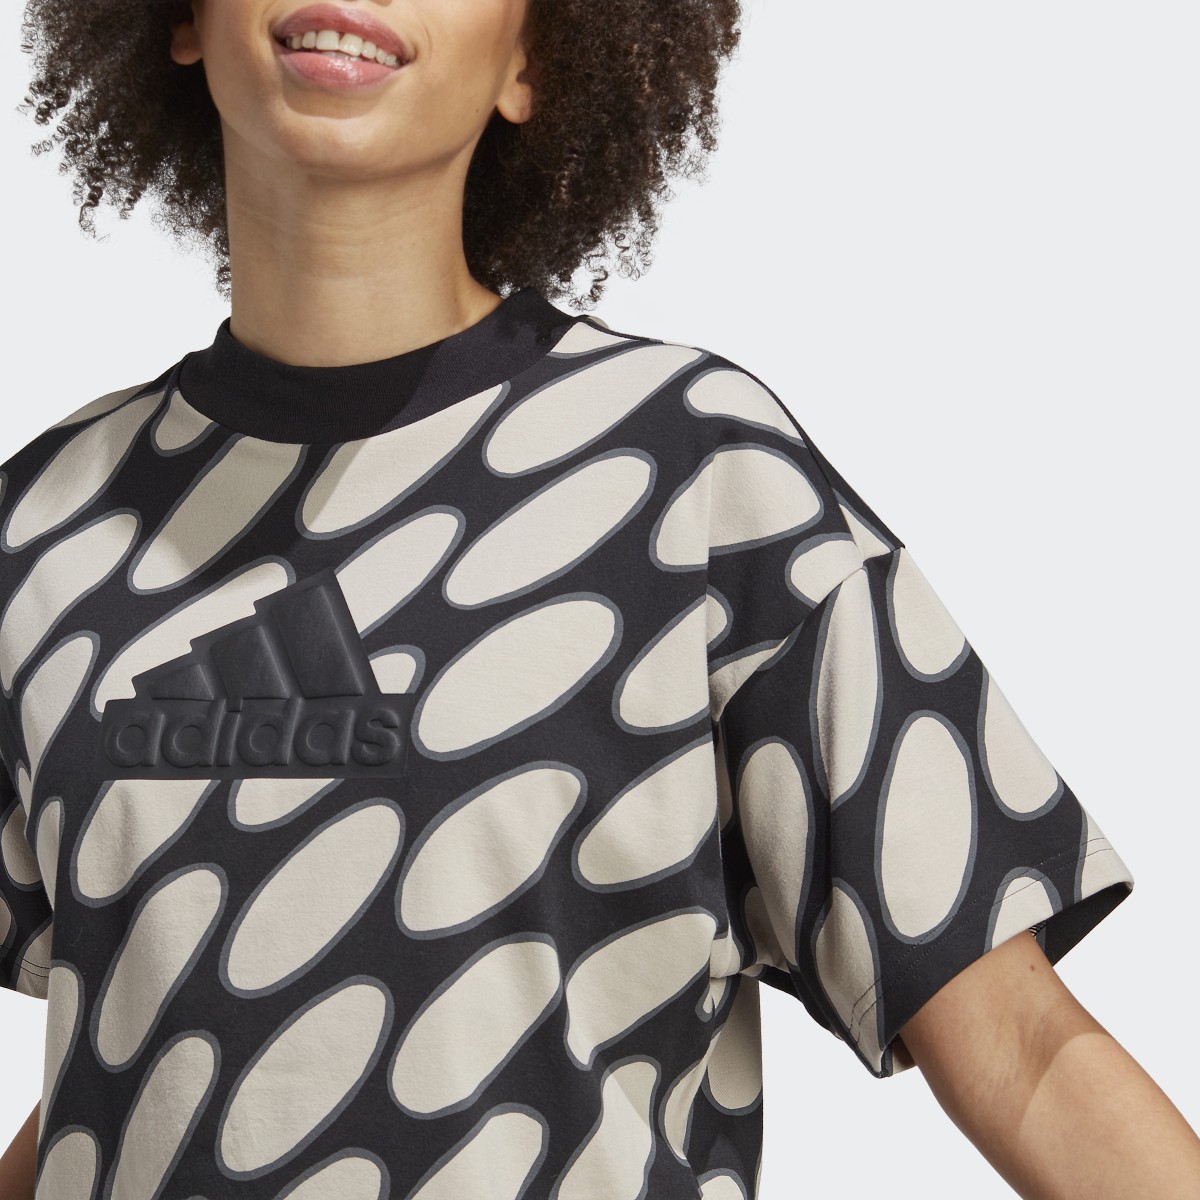 Adidas T-shirt 3-Stripes Future Icons Marimekko. 7